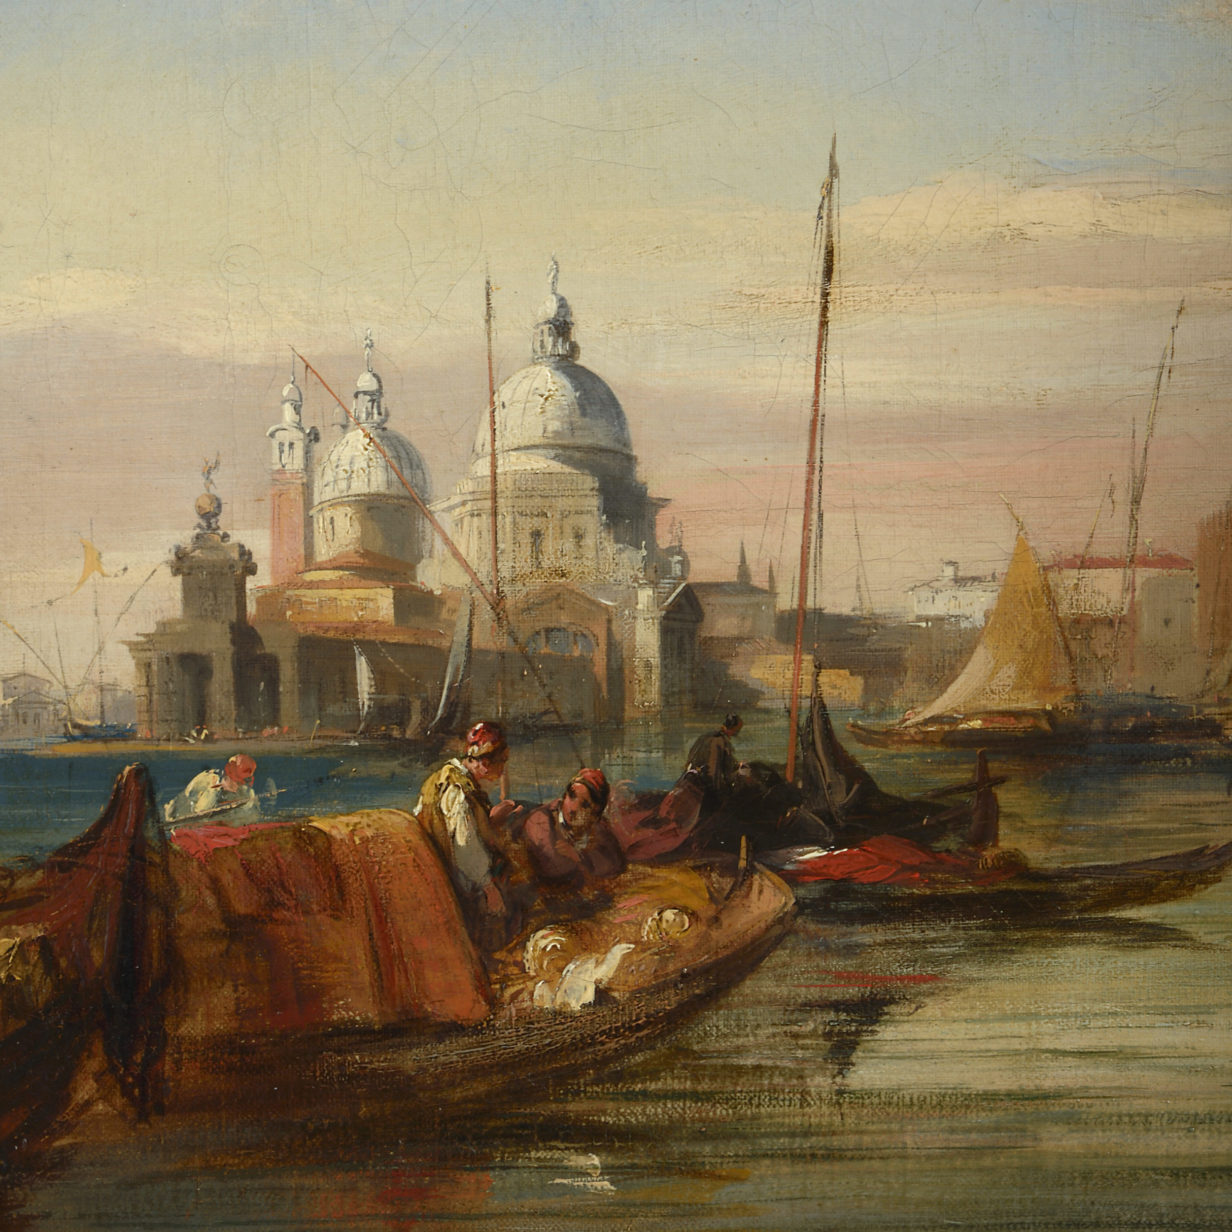 Edward pritchett (fl. 1828-1864) - a venetian canal scene